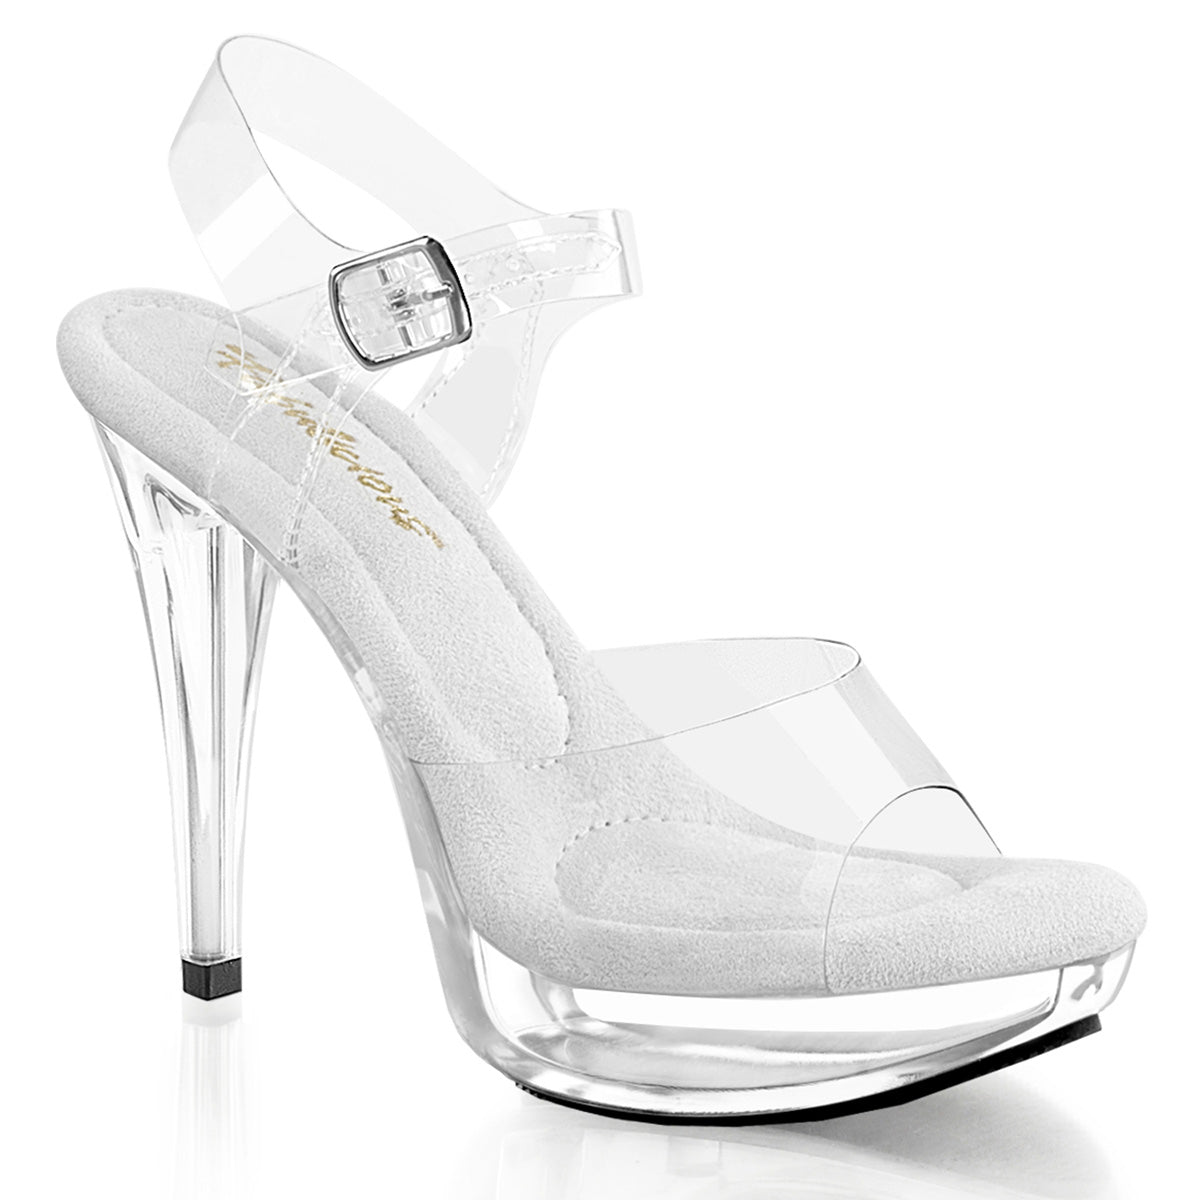 M-Jewel, 5 Inch High Heel with 3/4 Inch Platform Clear Bridal Shoes  w/rhinestones